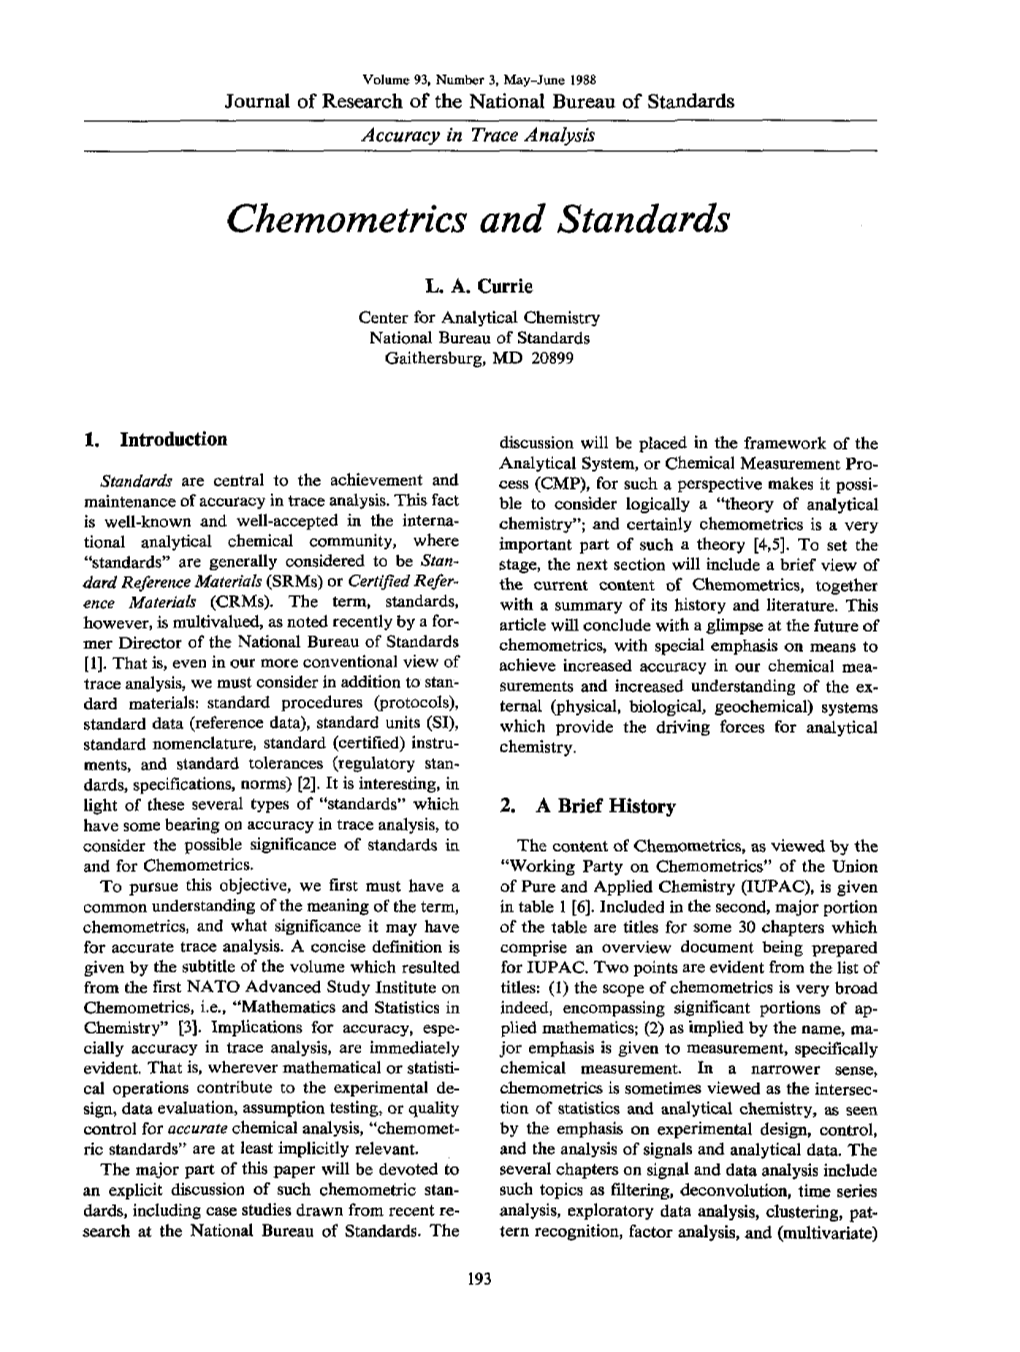 Chemometrics and Standards